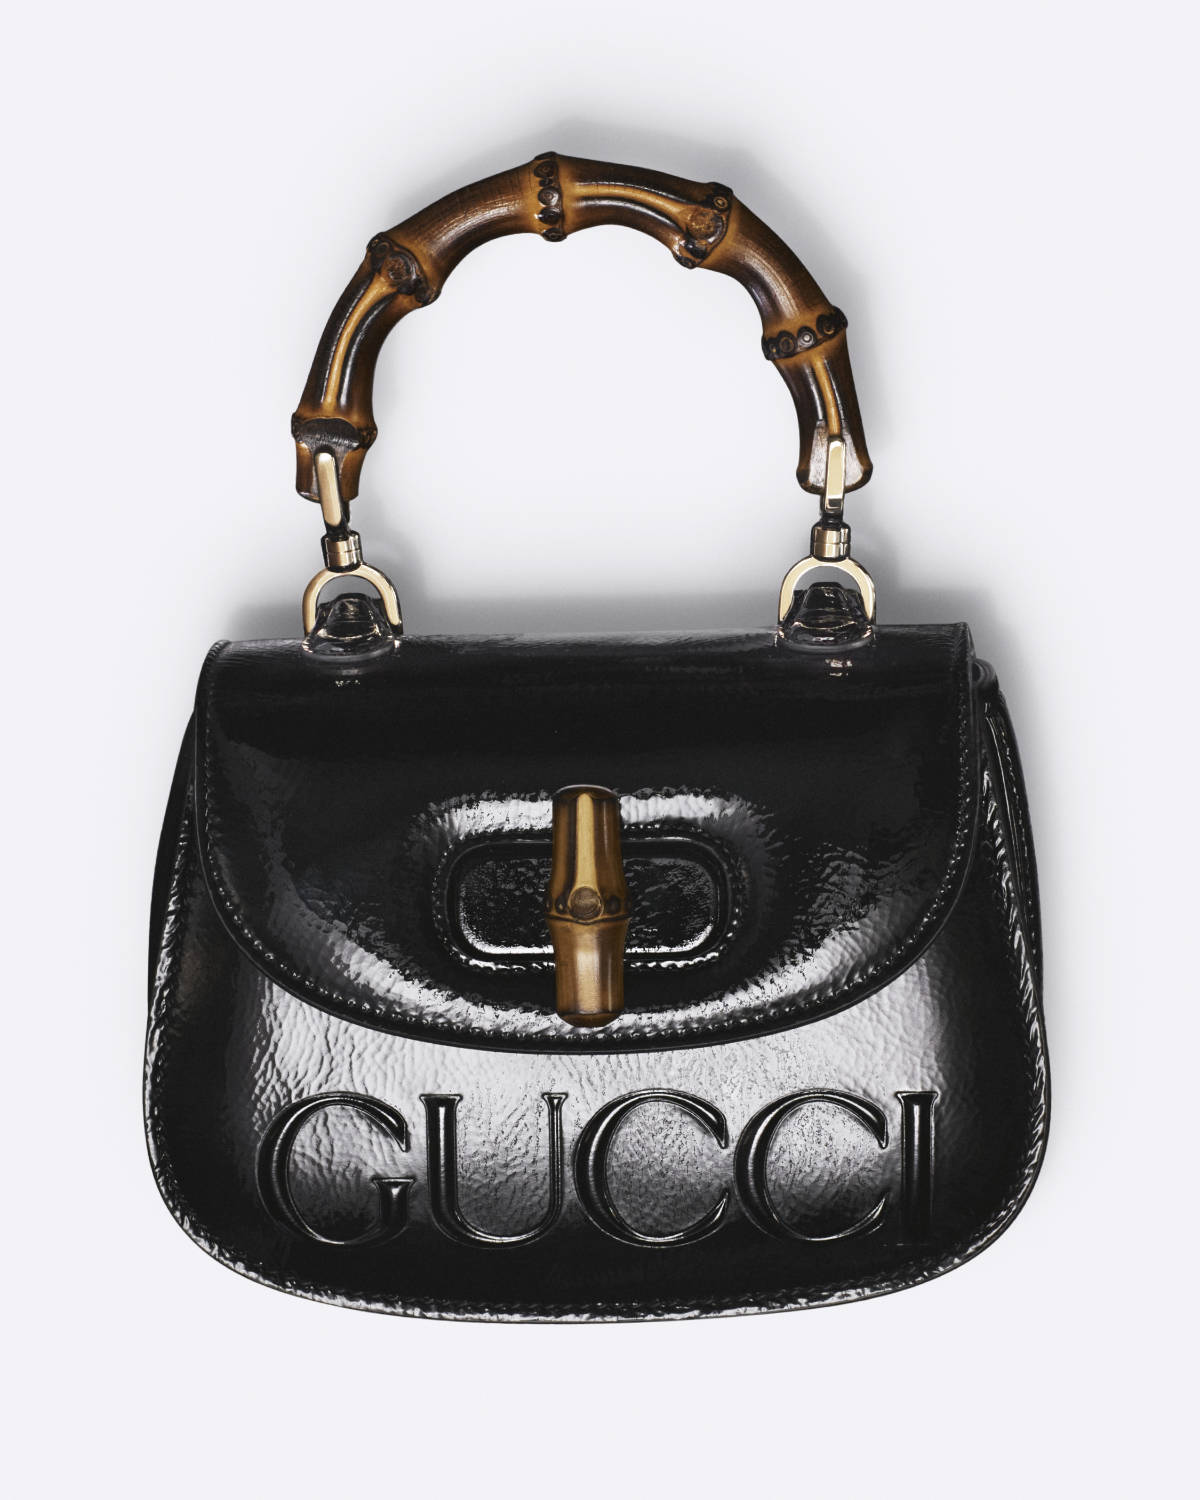 Introducing The Gucci Ancora Campaign